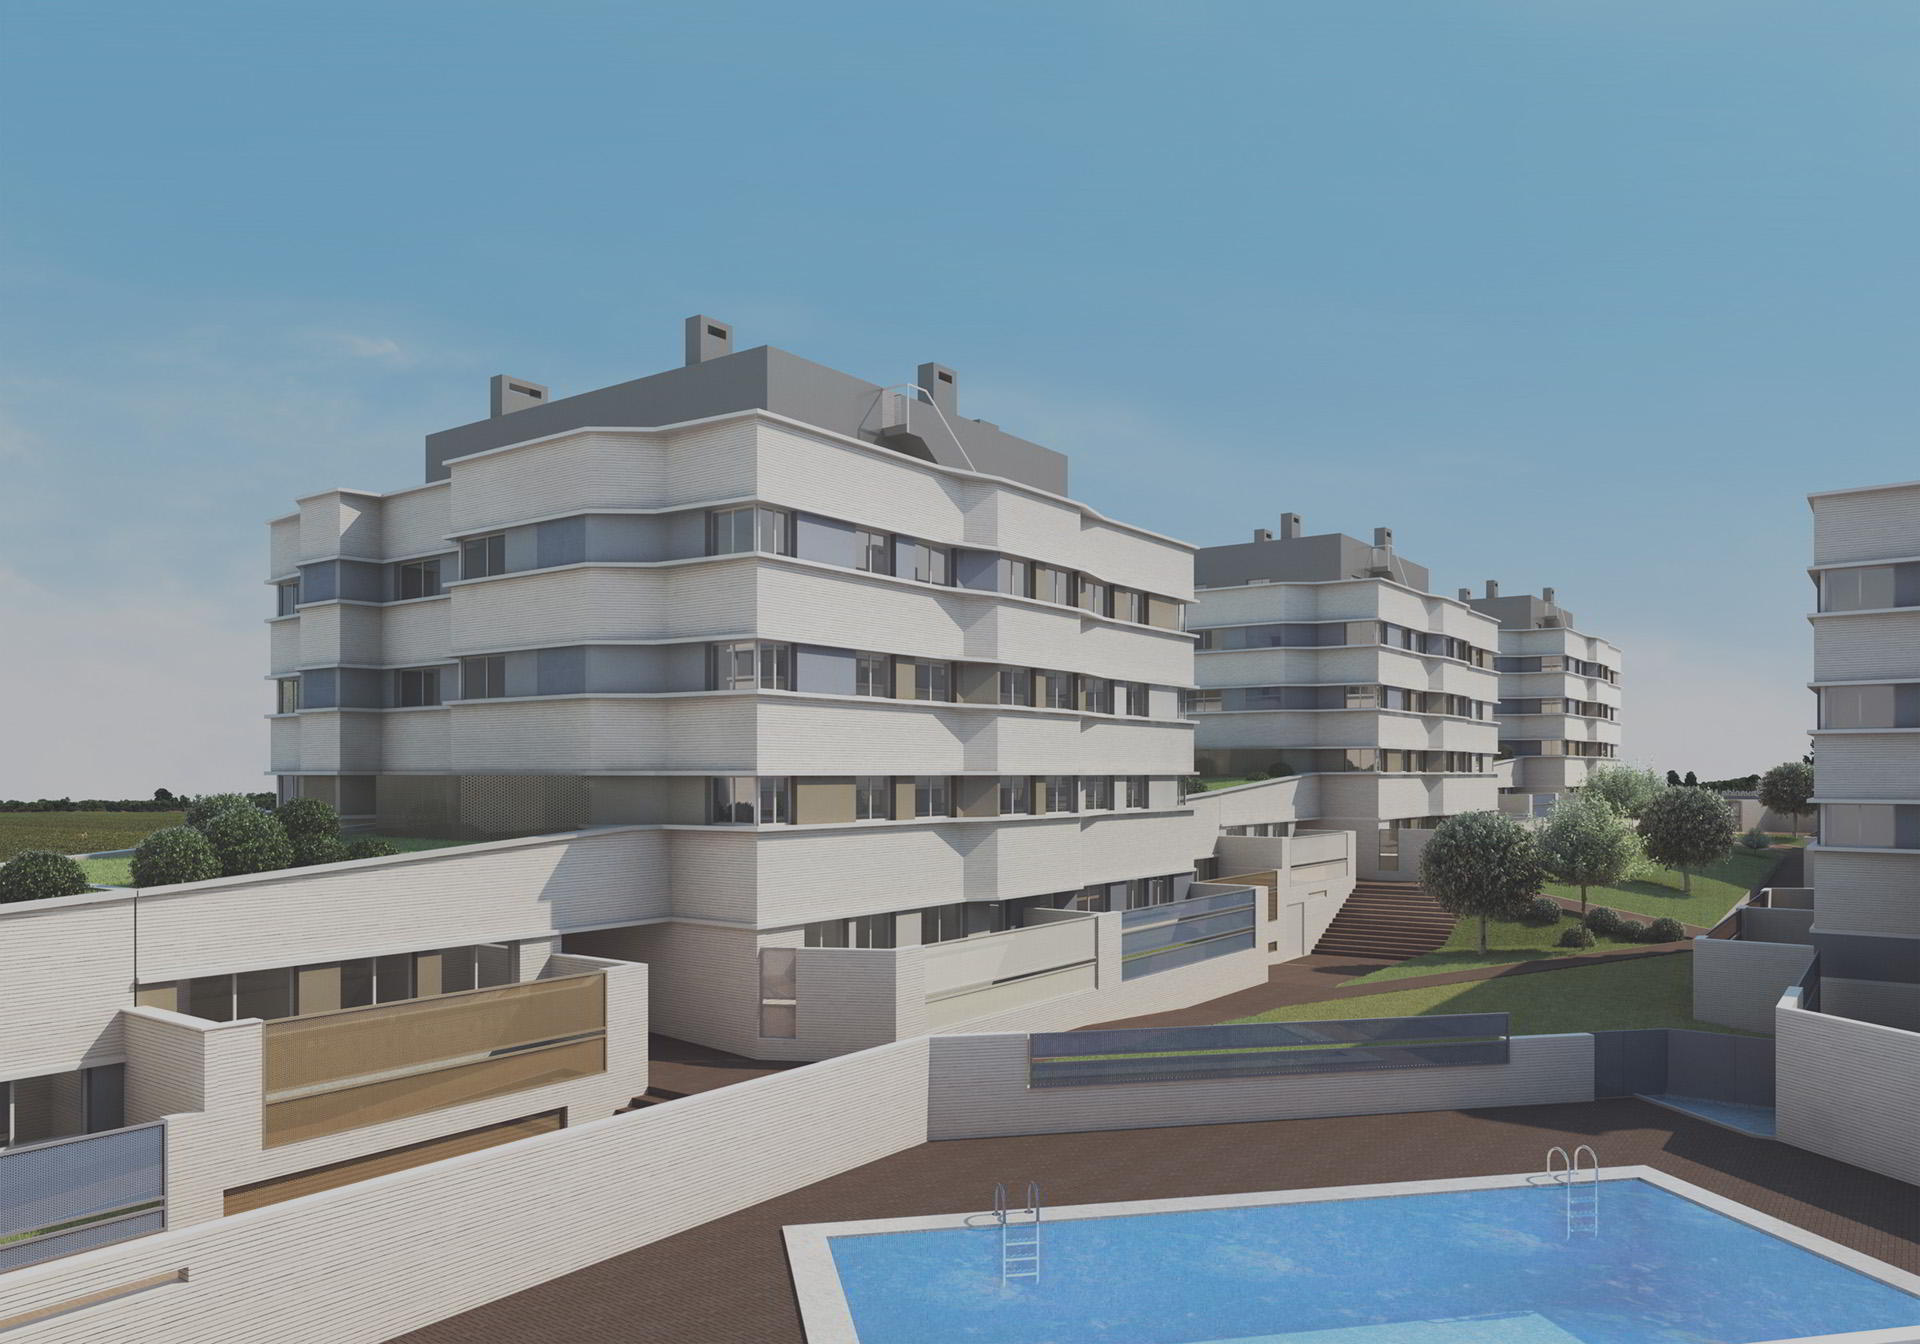 Aprendizaje plato Óptima Las Seis Torres (VPPB) - Venta de pisos de obra nueva en Getafe | Grupo  Ferrocarril